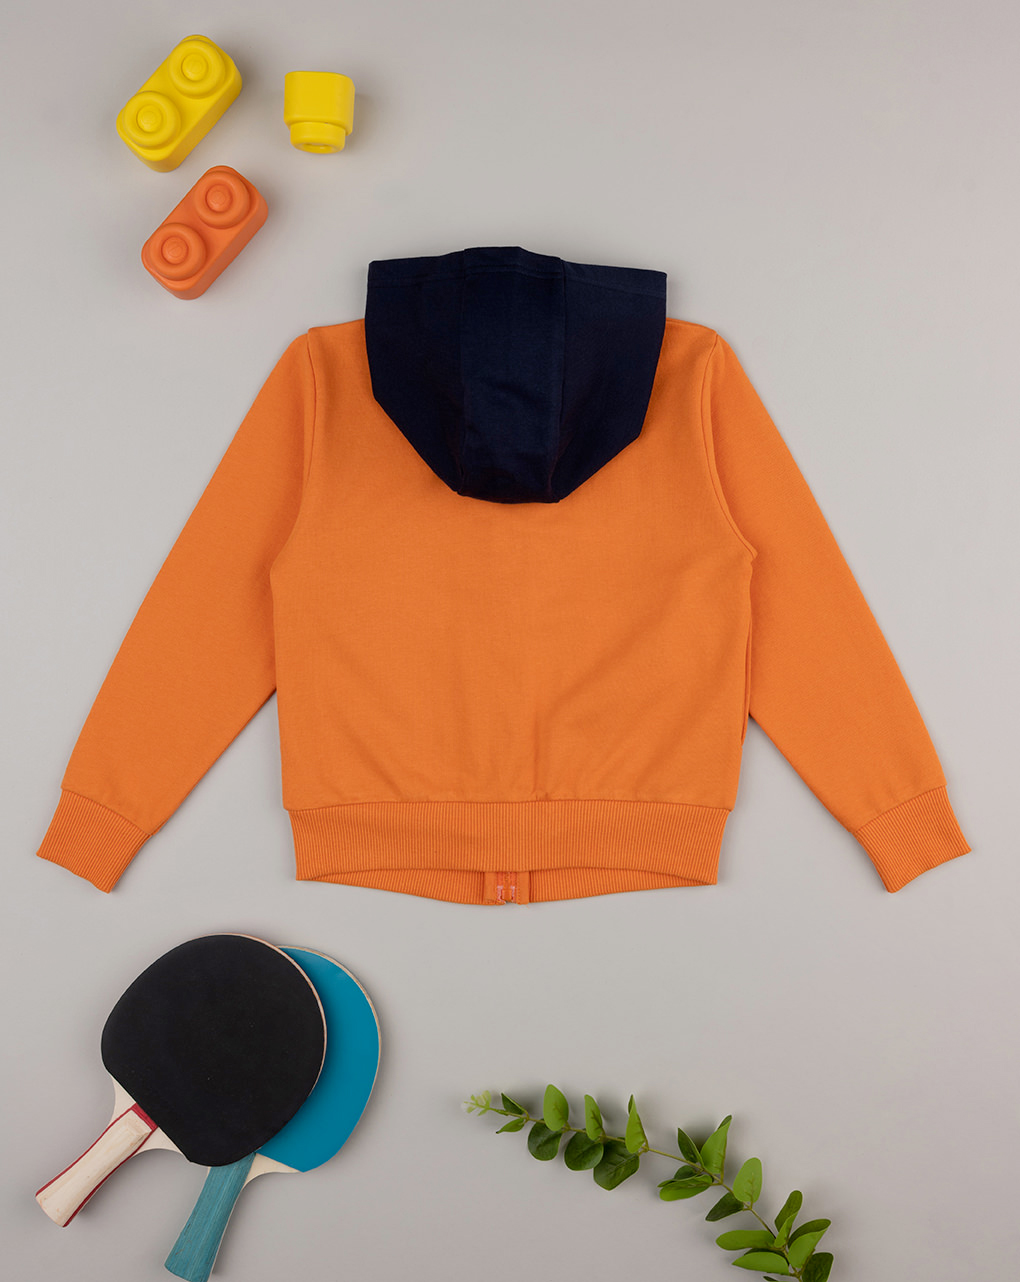 Sudadera con capucha naranja bebé - Prénatal